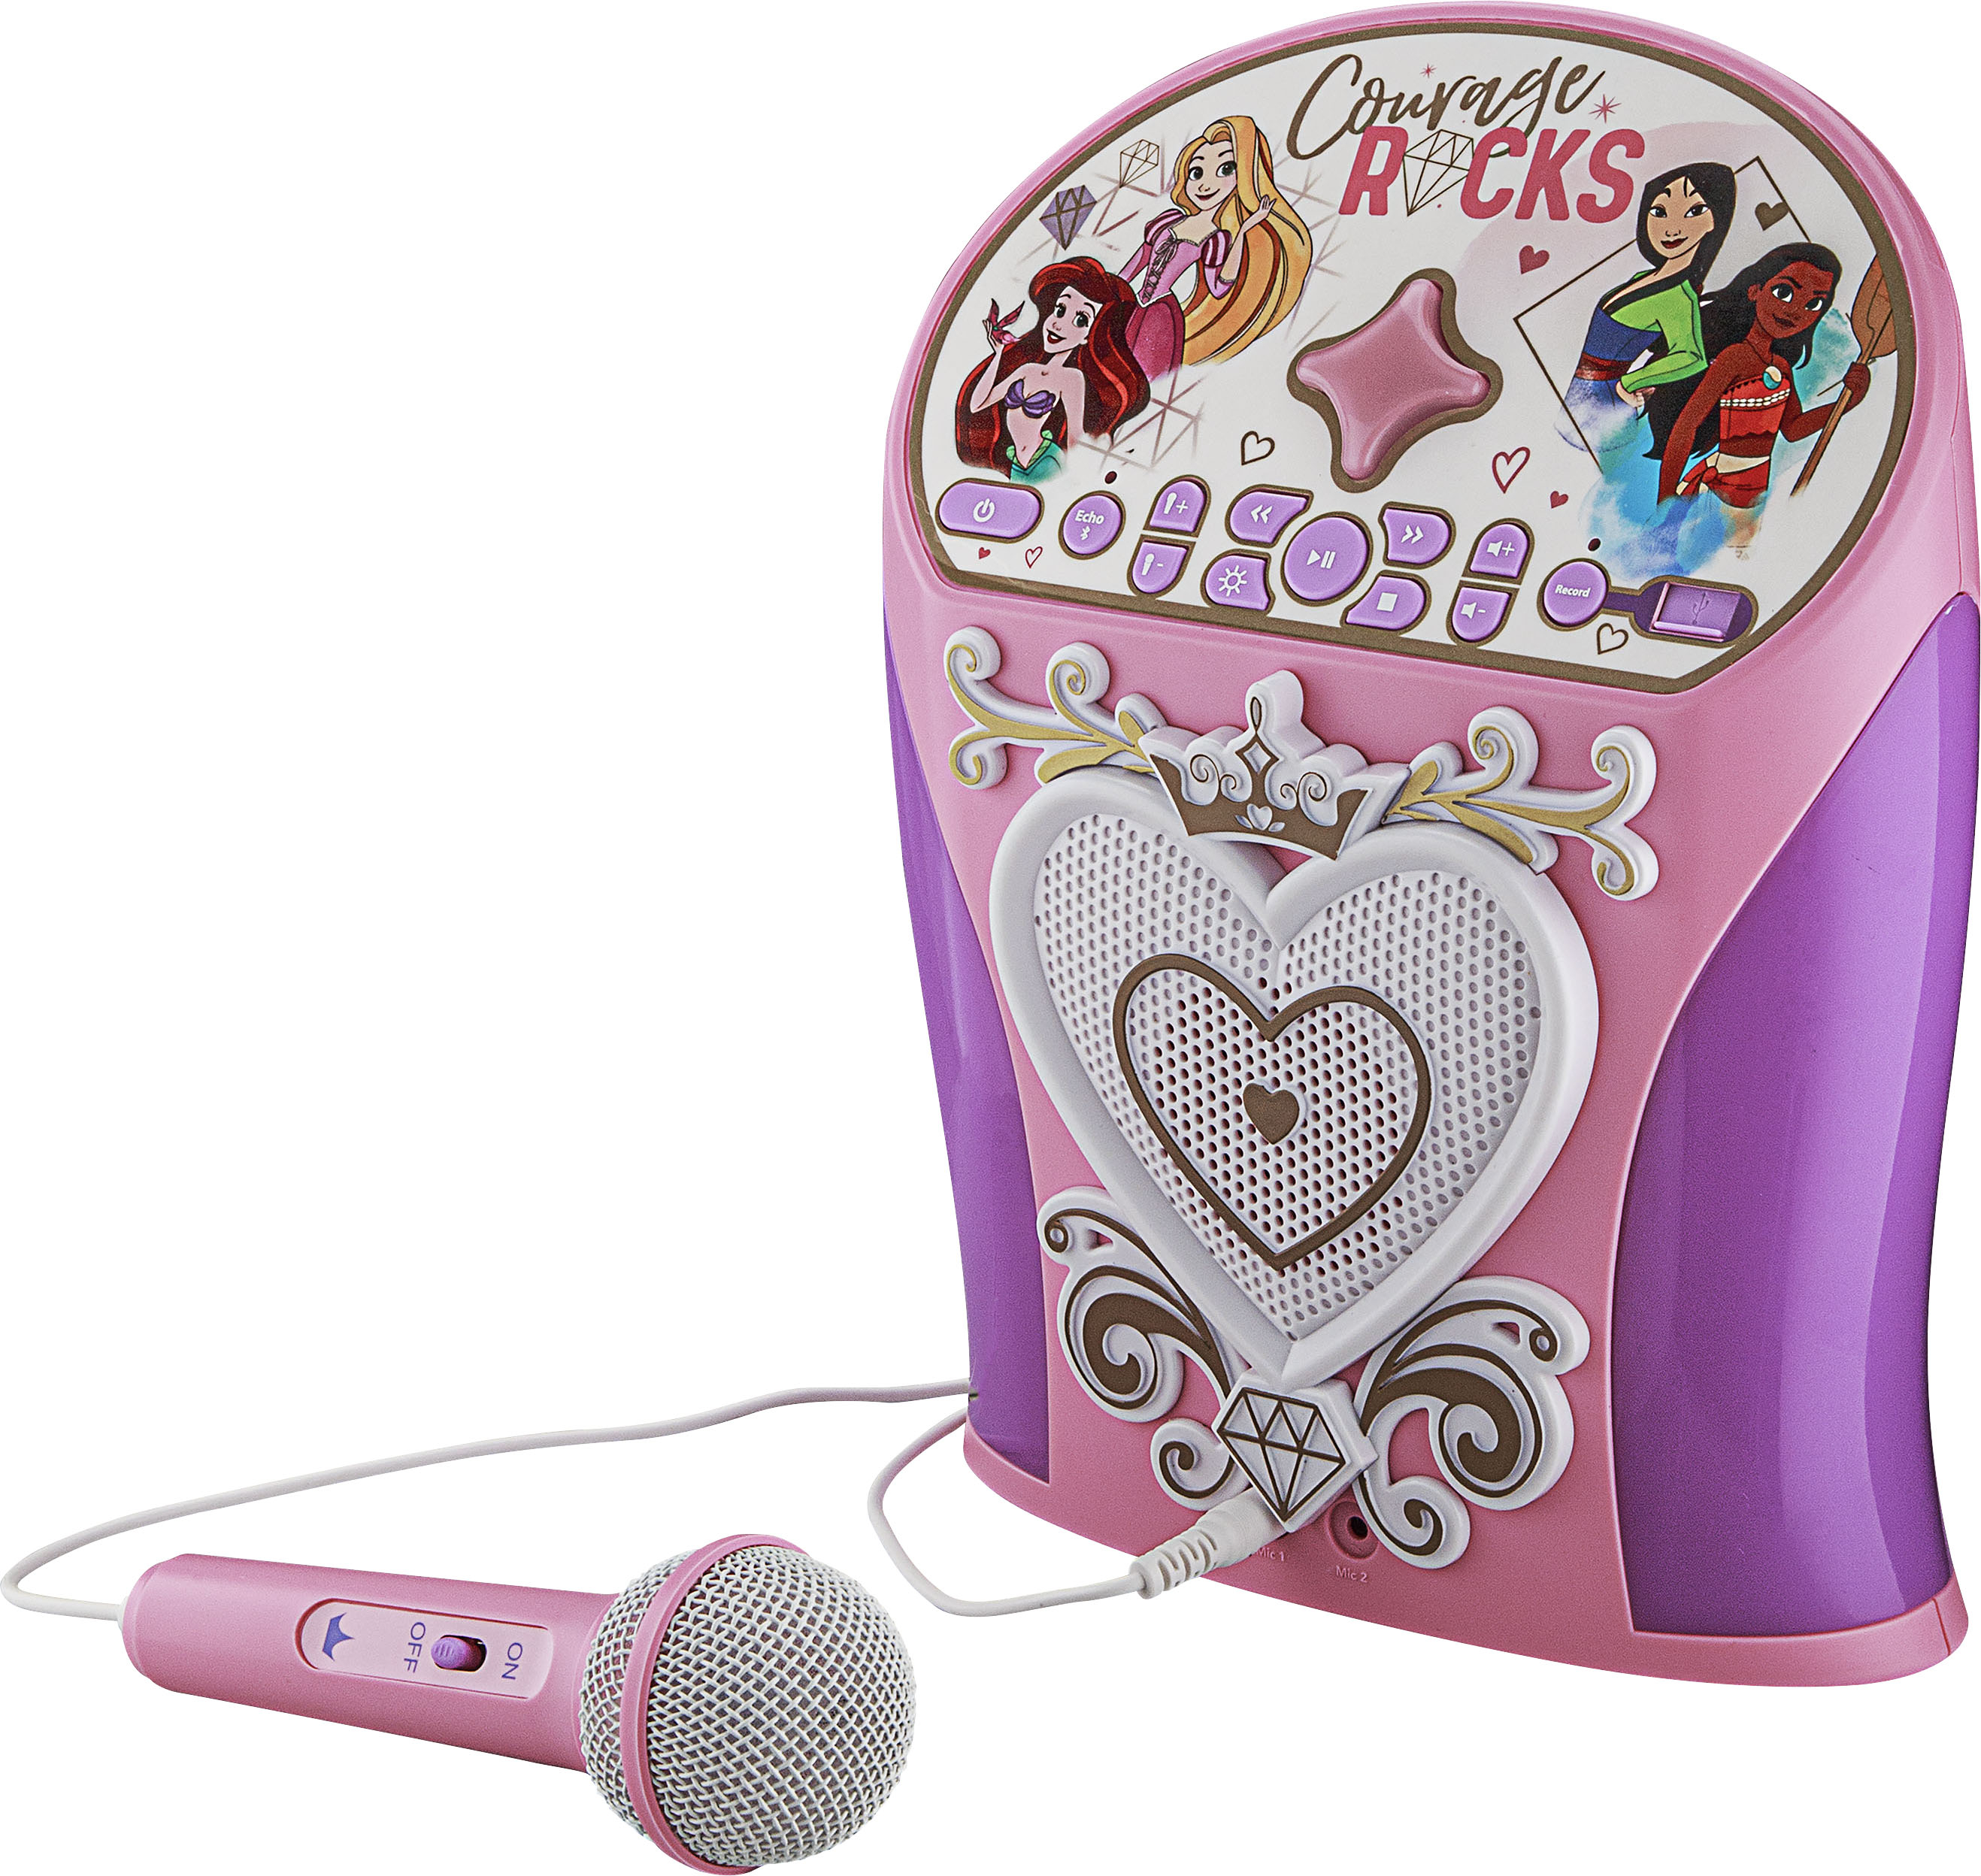 Left View: eKids - Disney Princess Bluetooth Karaoke with EZ Link Technology - Pink